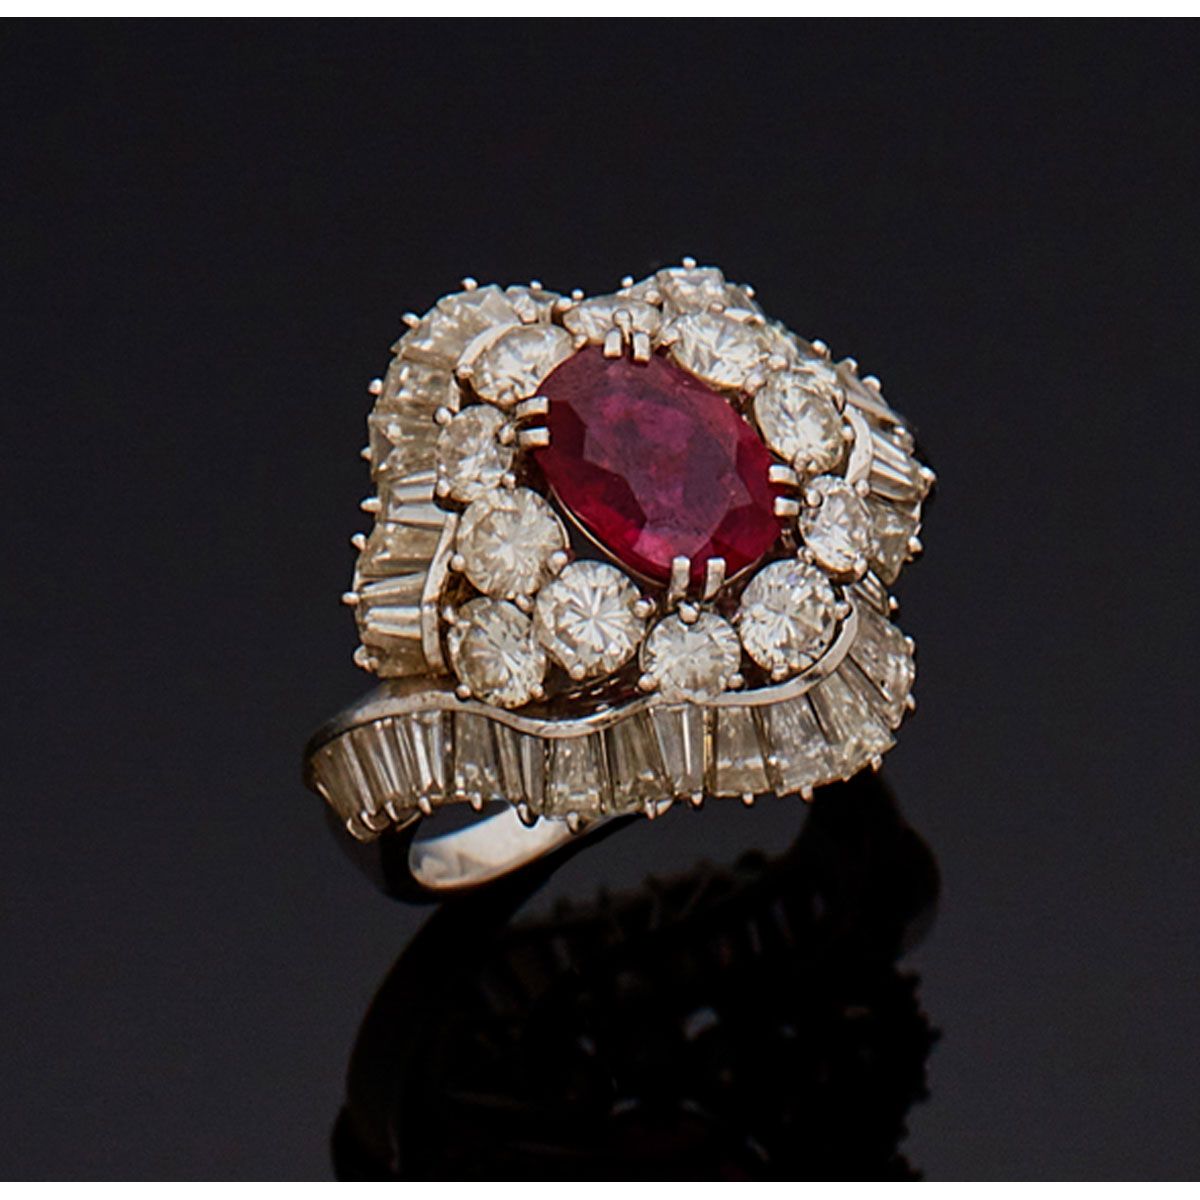 Null 800毫米的铂金戒指，镶嵌着一颗红宝石，周围有12颗明亮式切割钻石和一排锥形钻石。

B.P. 11.8g。- TDD 56